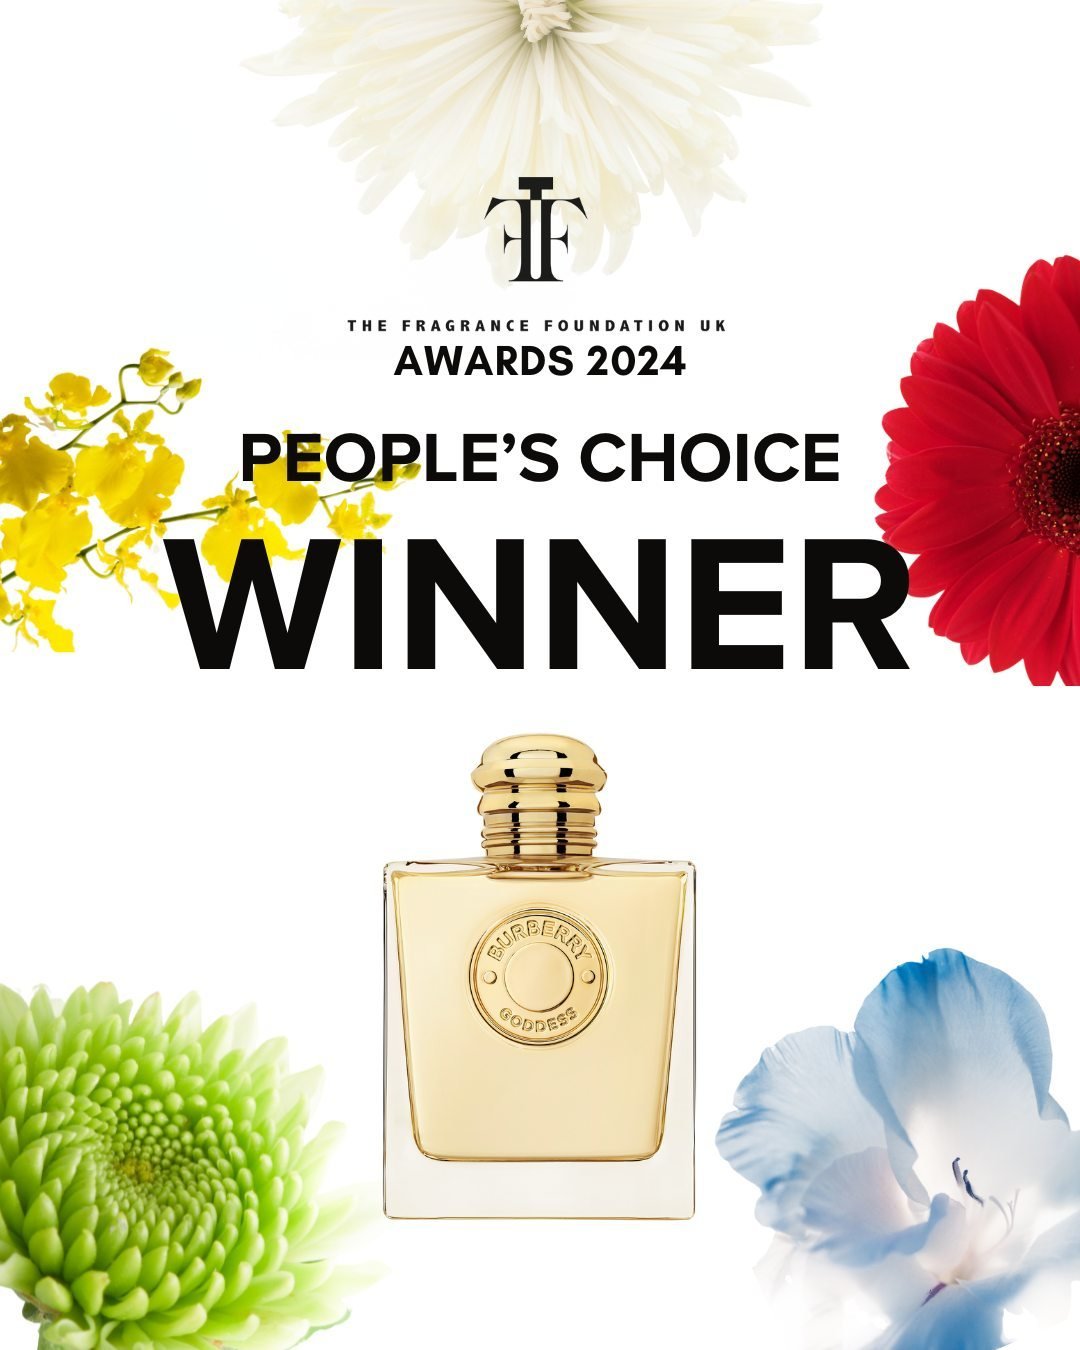 Winner of The Fragrance Foundation UK People&rsquo;s Choice Award... 
@Burberry Goddess EDP by @firmenichfine Perfumer @amandine.clerc.marie ! Congratulations!

#TFFAwards2024 #Winner #FragranceAwards #Fragrance #FragranceLover #FragranceCelebration